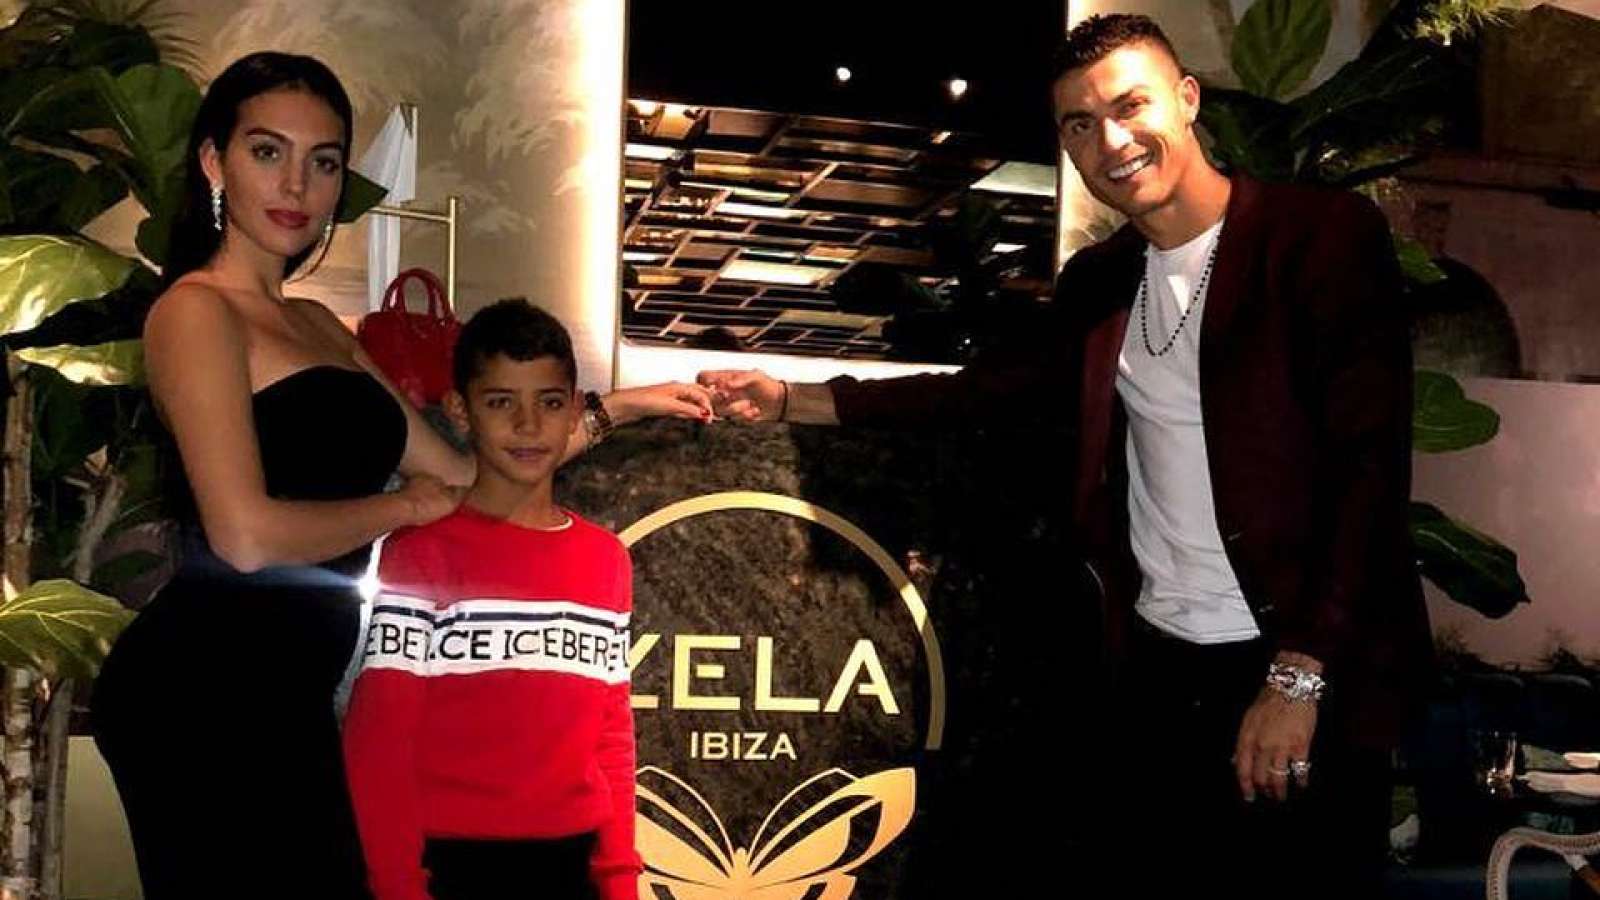 Cristiano Ronaldo and family enjoy dinner in London